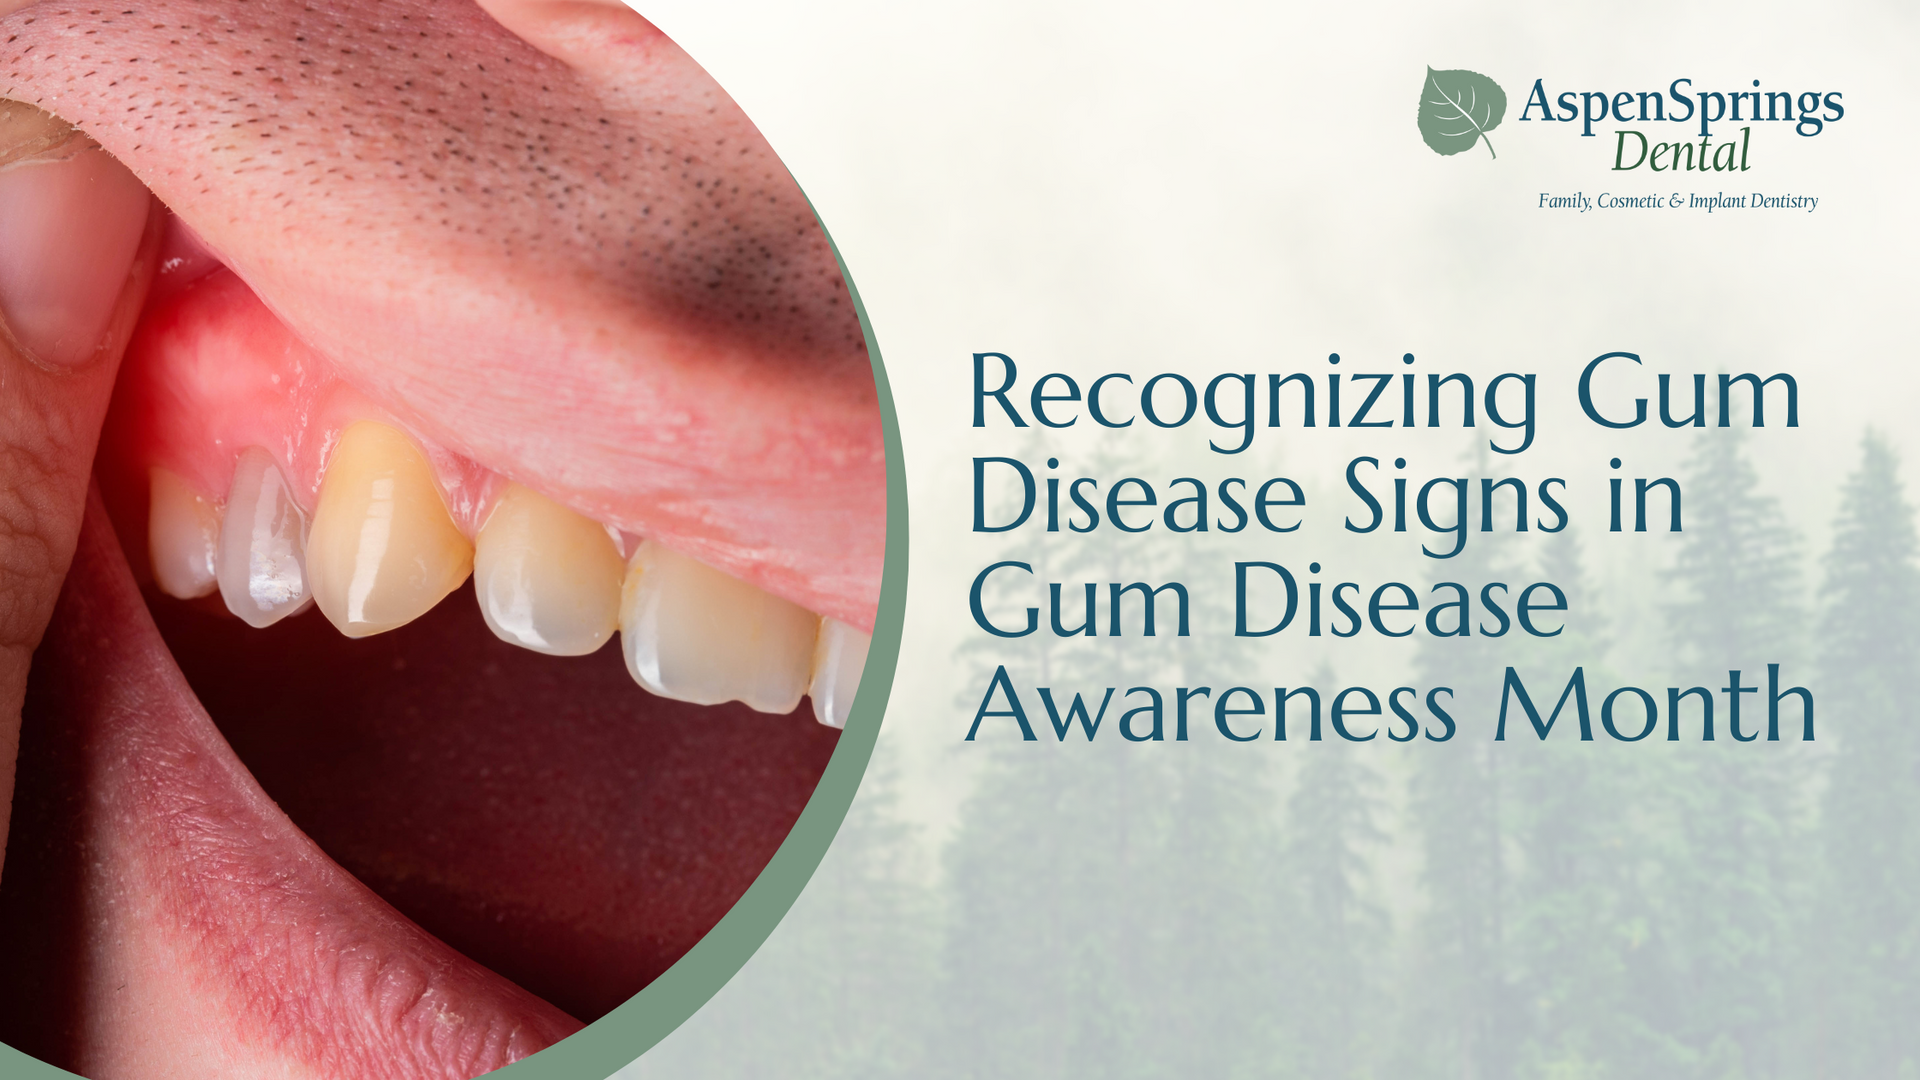 aspen springs dental is recognizing gum disease signs in gum disease awareness month .